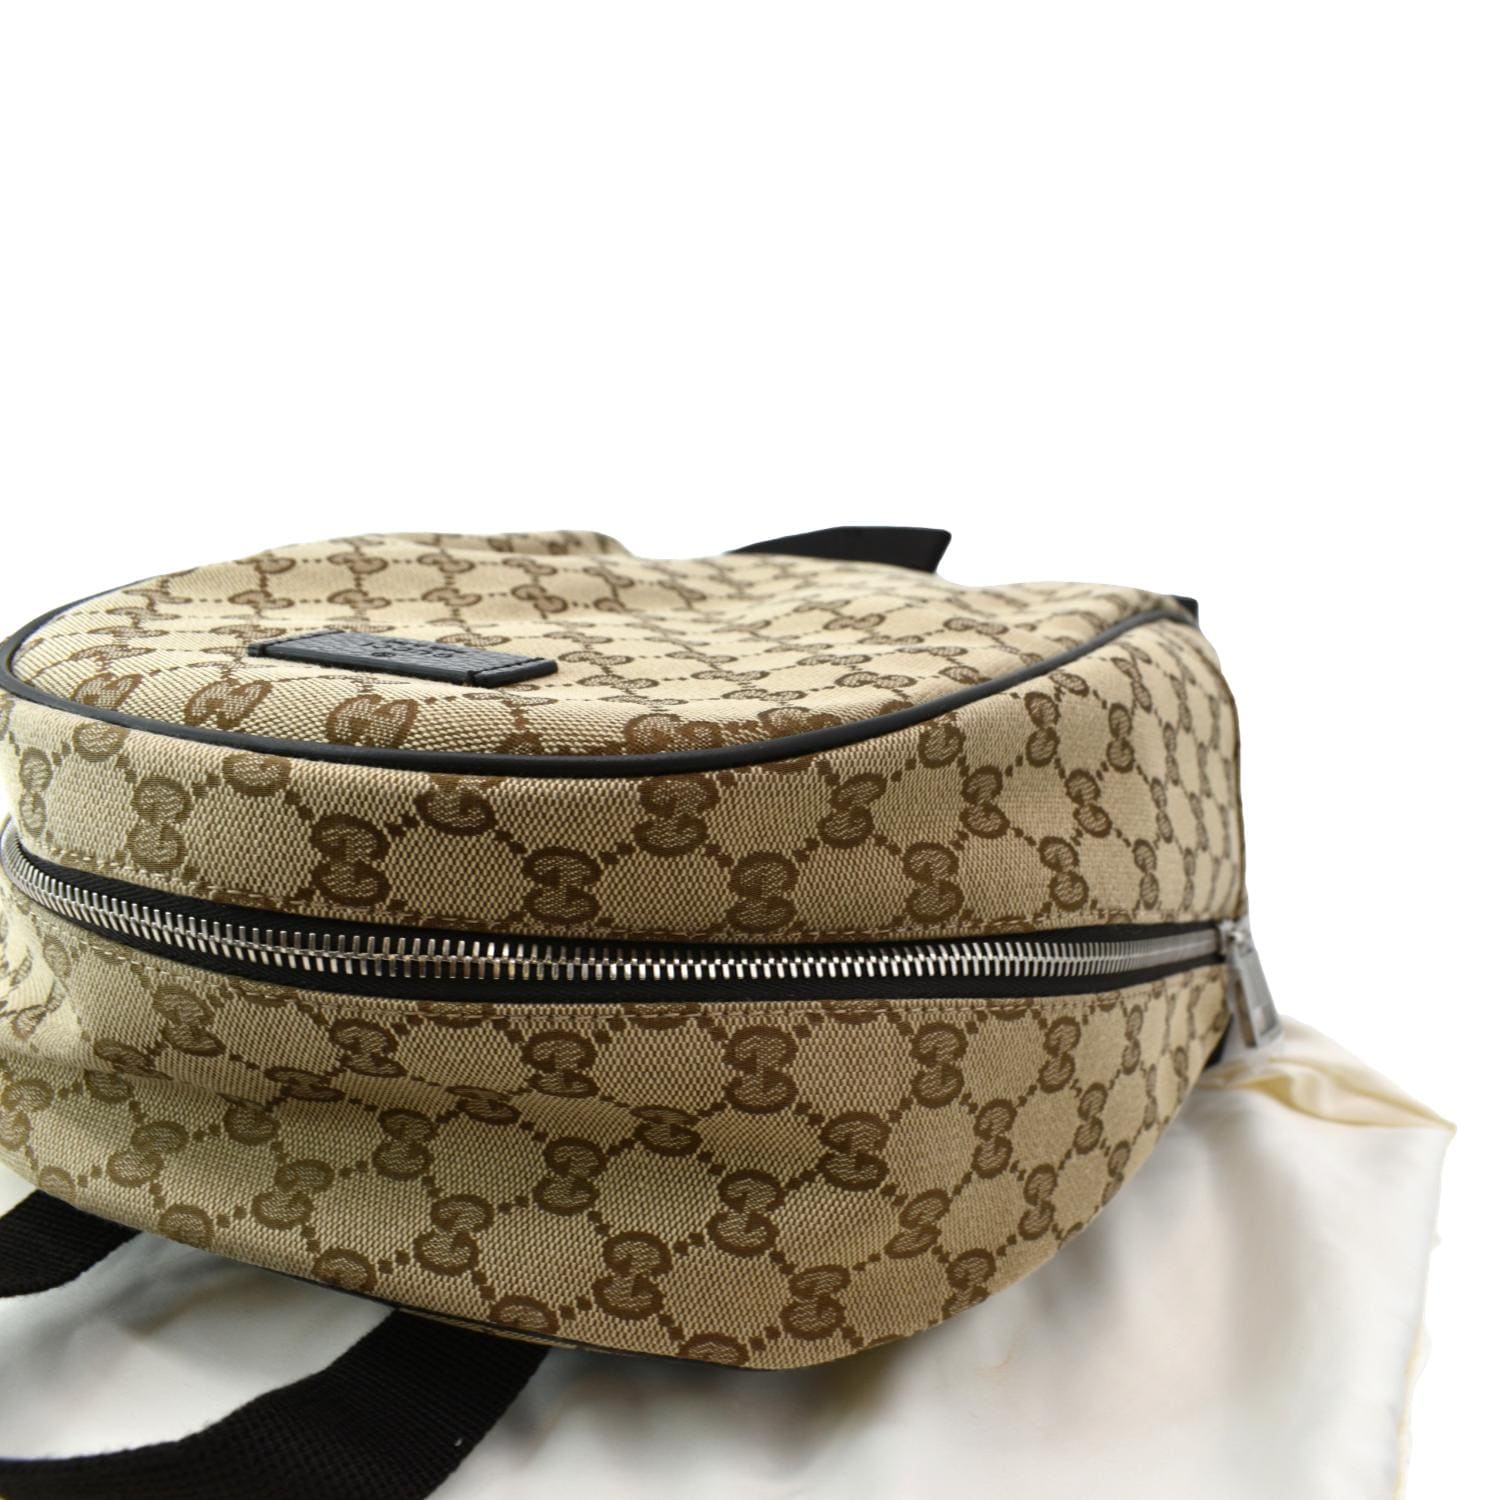 Cloth backpack Gucci Beige in Cloth - 21403691